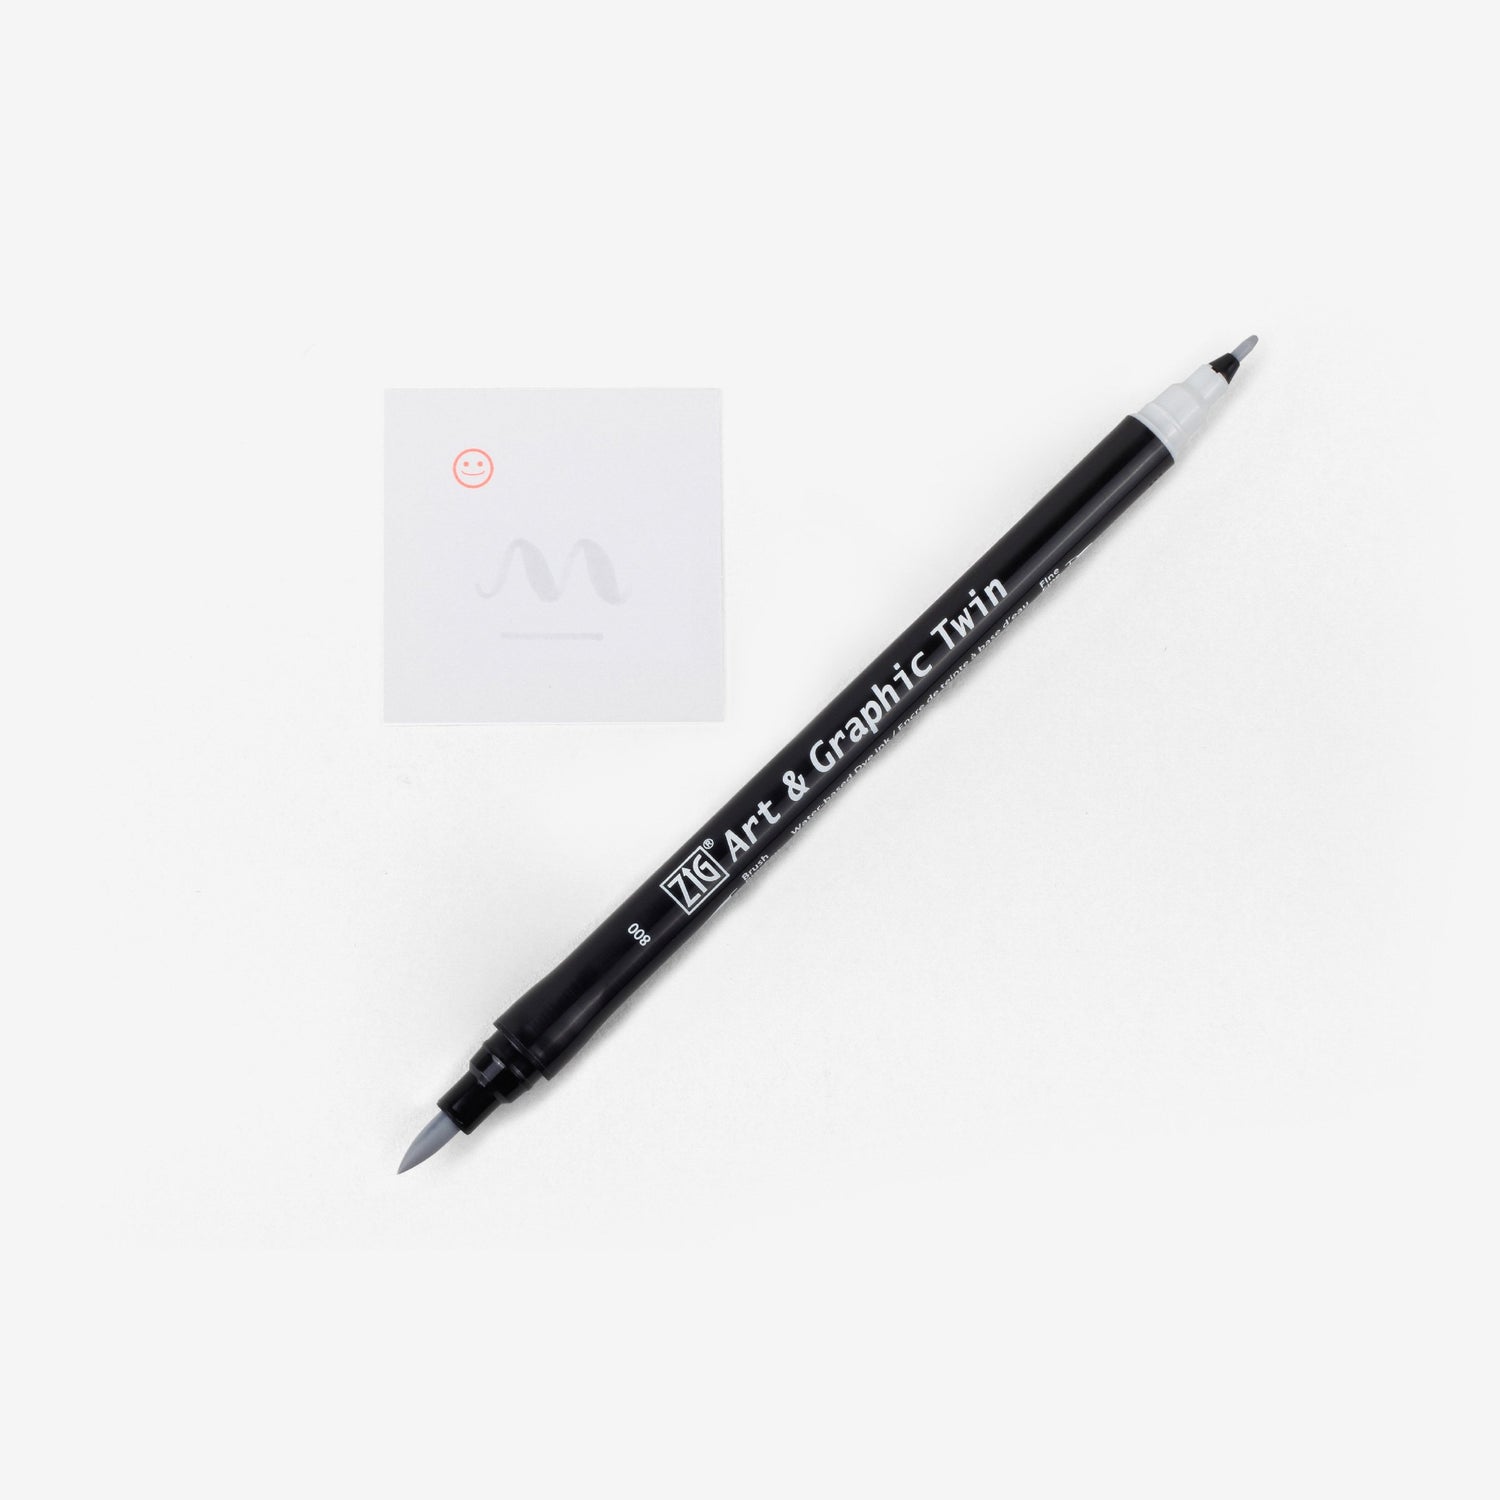 Kuretake Art & Graphic Twin Pen - Cool Grey 1